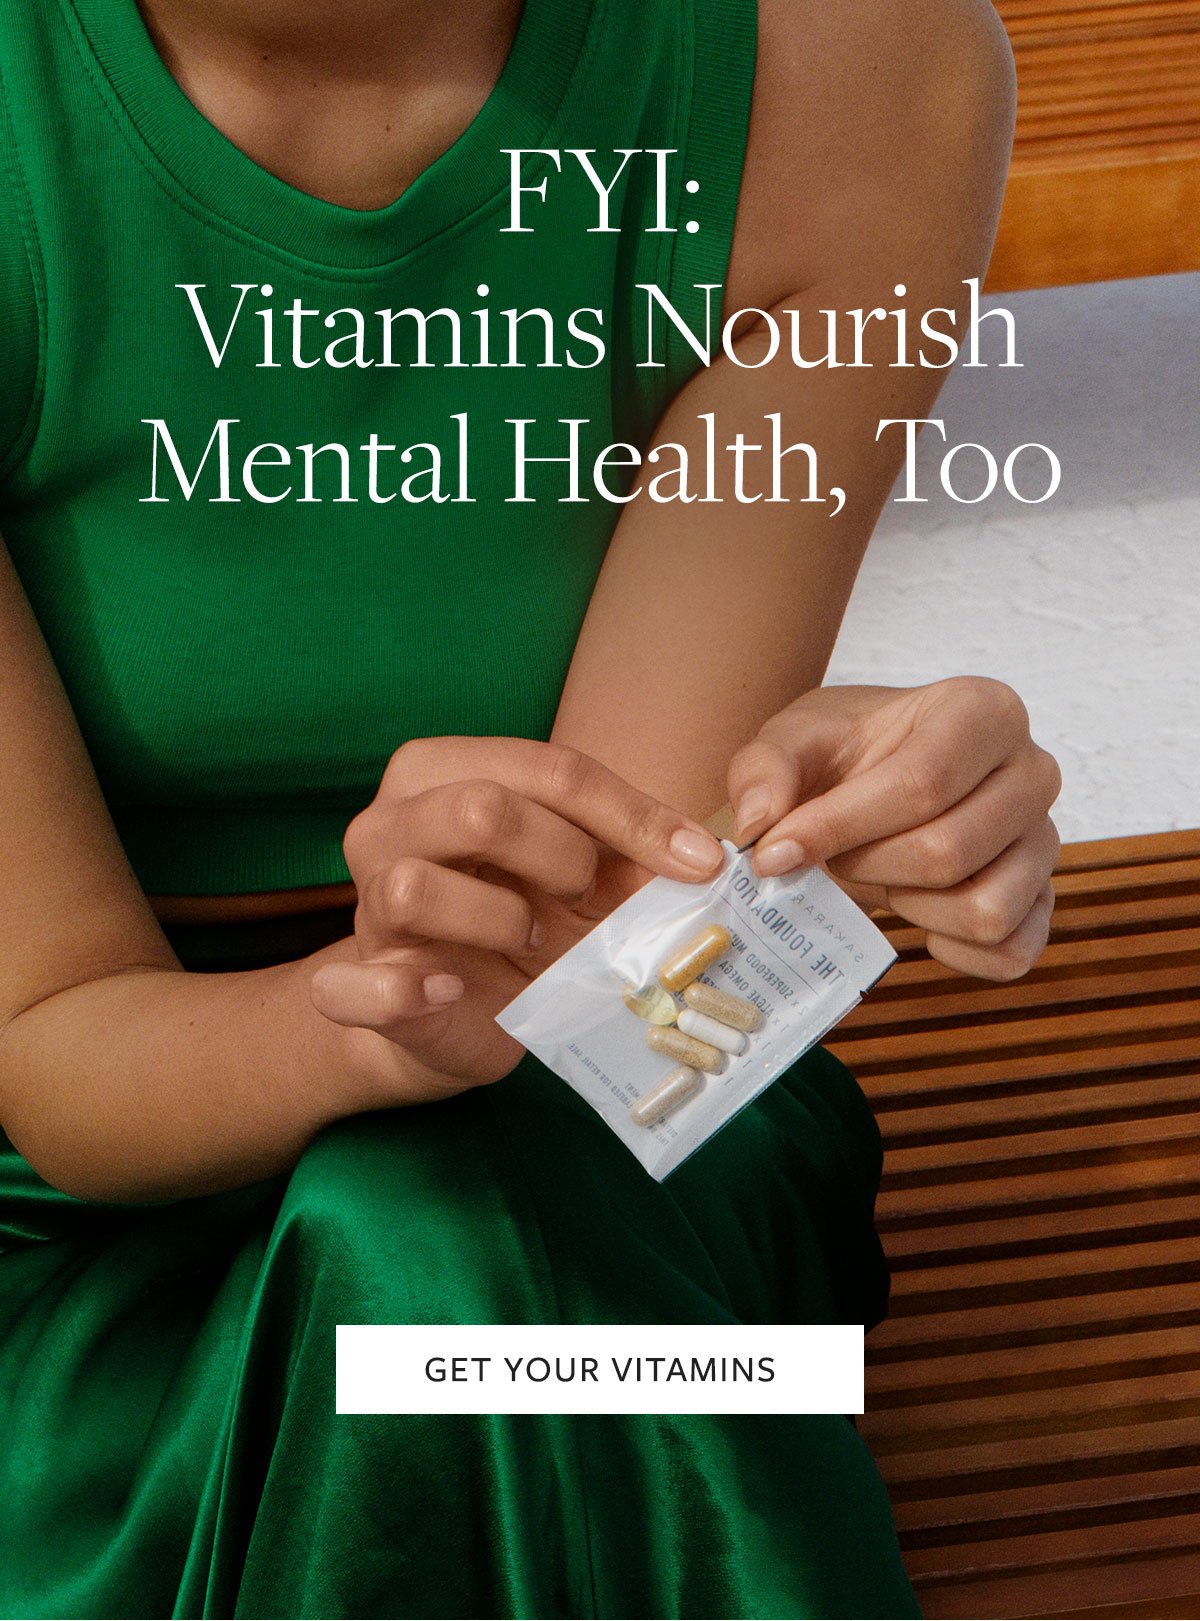 FYI: Vitamins Nourish Mental Health, Too